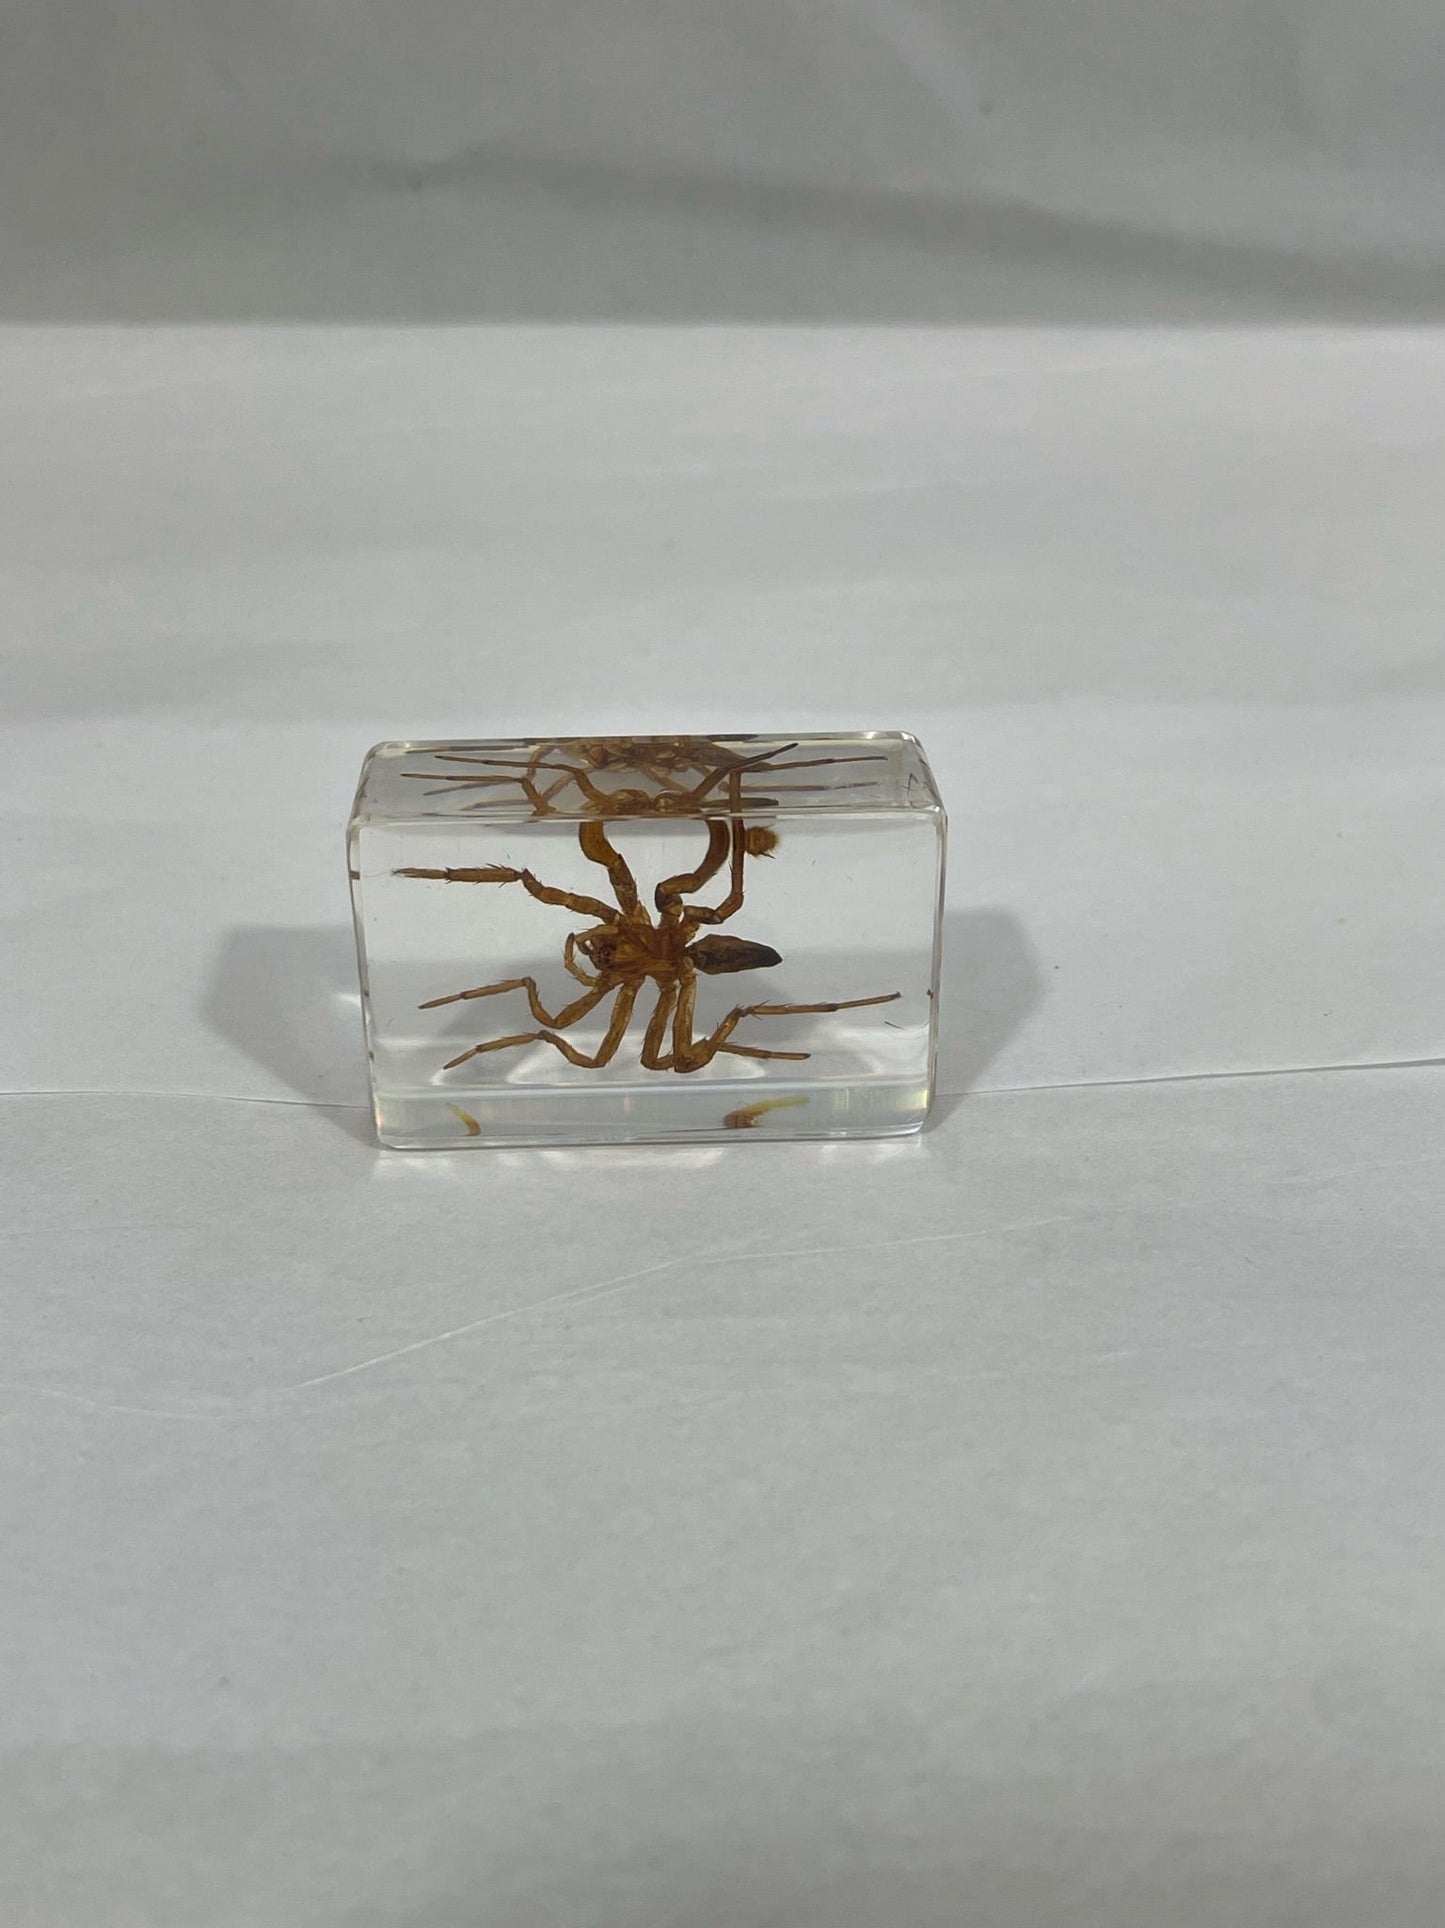 1.1" Cuboid Spider Paperweight